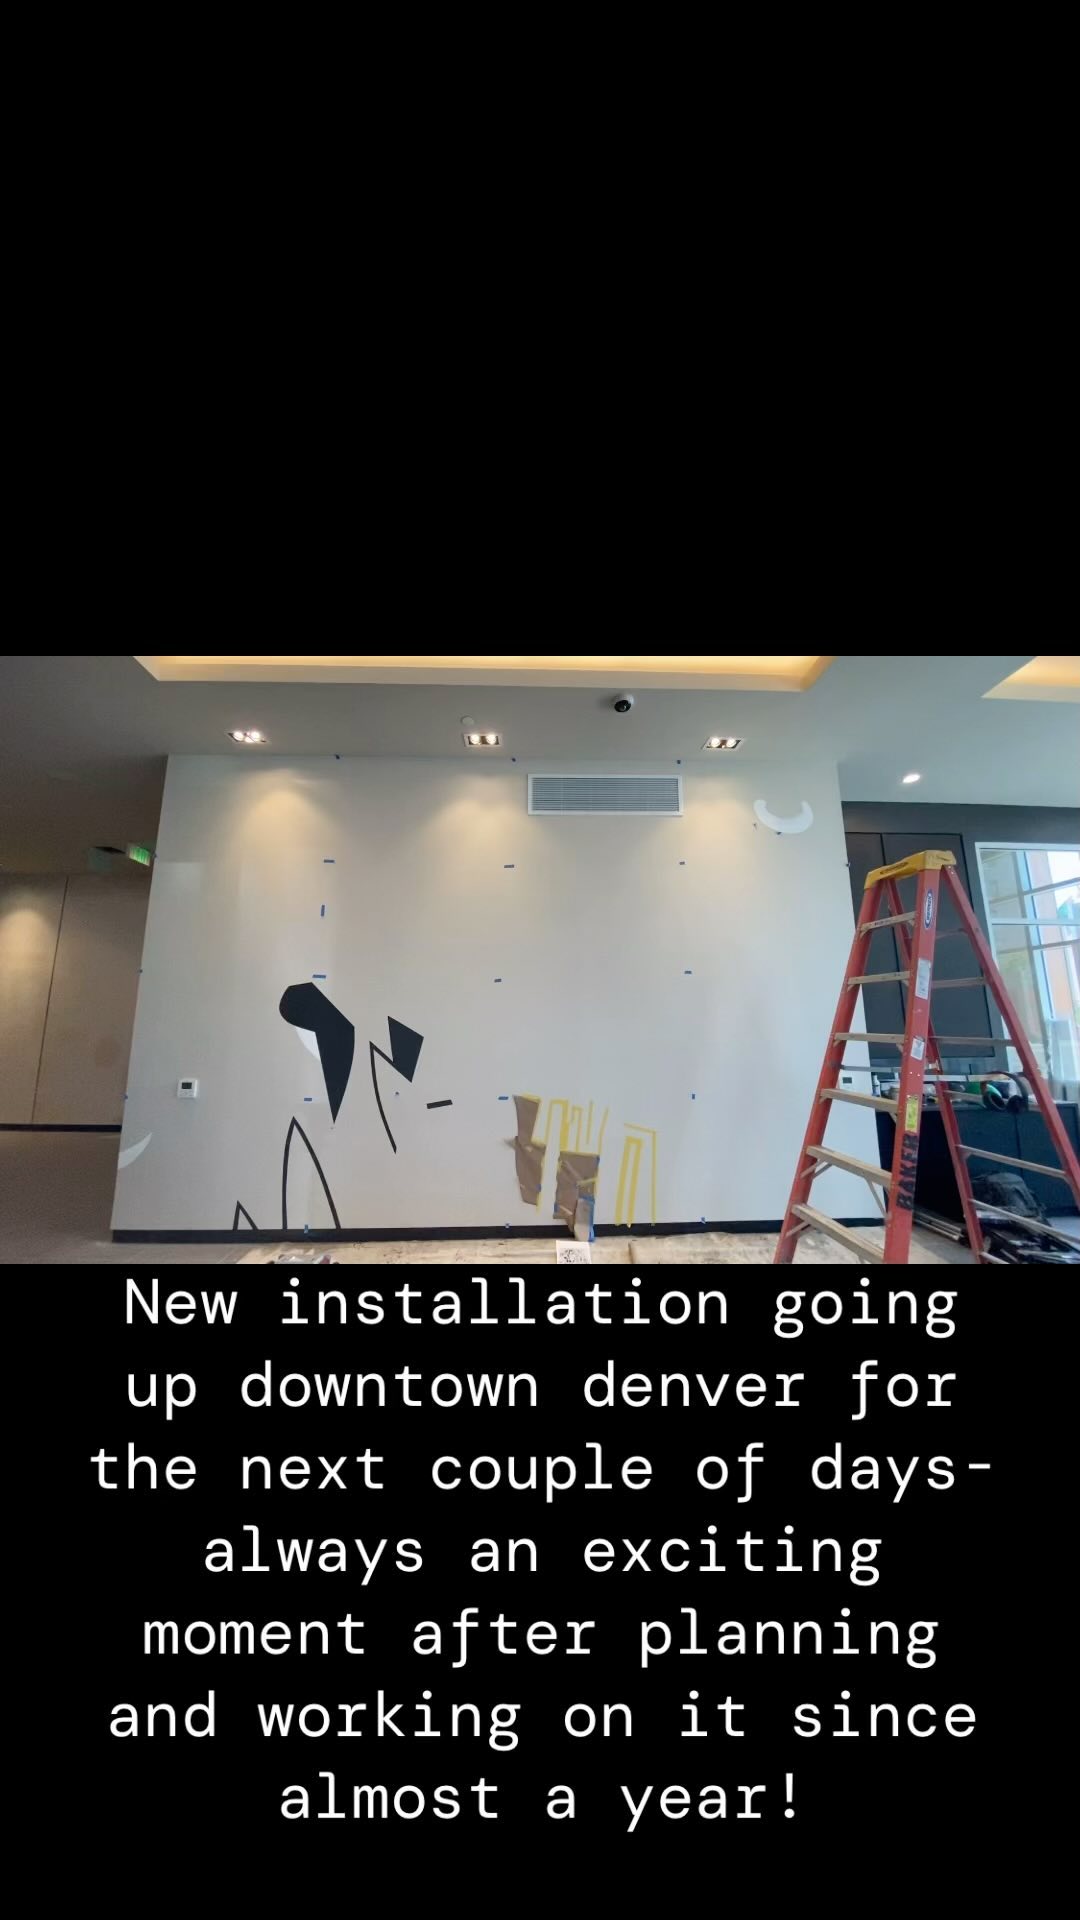 New installation going up downtown Denver over the next t. Couple of days. #installation #publicart #sabinaell @walkerfineart #denverartist #installationart #artcollectorsoftheworld #artcollector #art #artinpublicplaces #artlover #artcurator